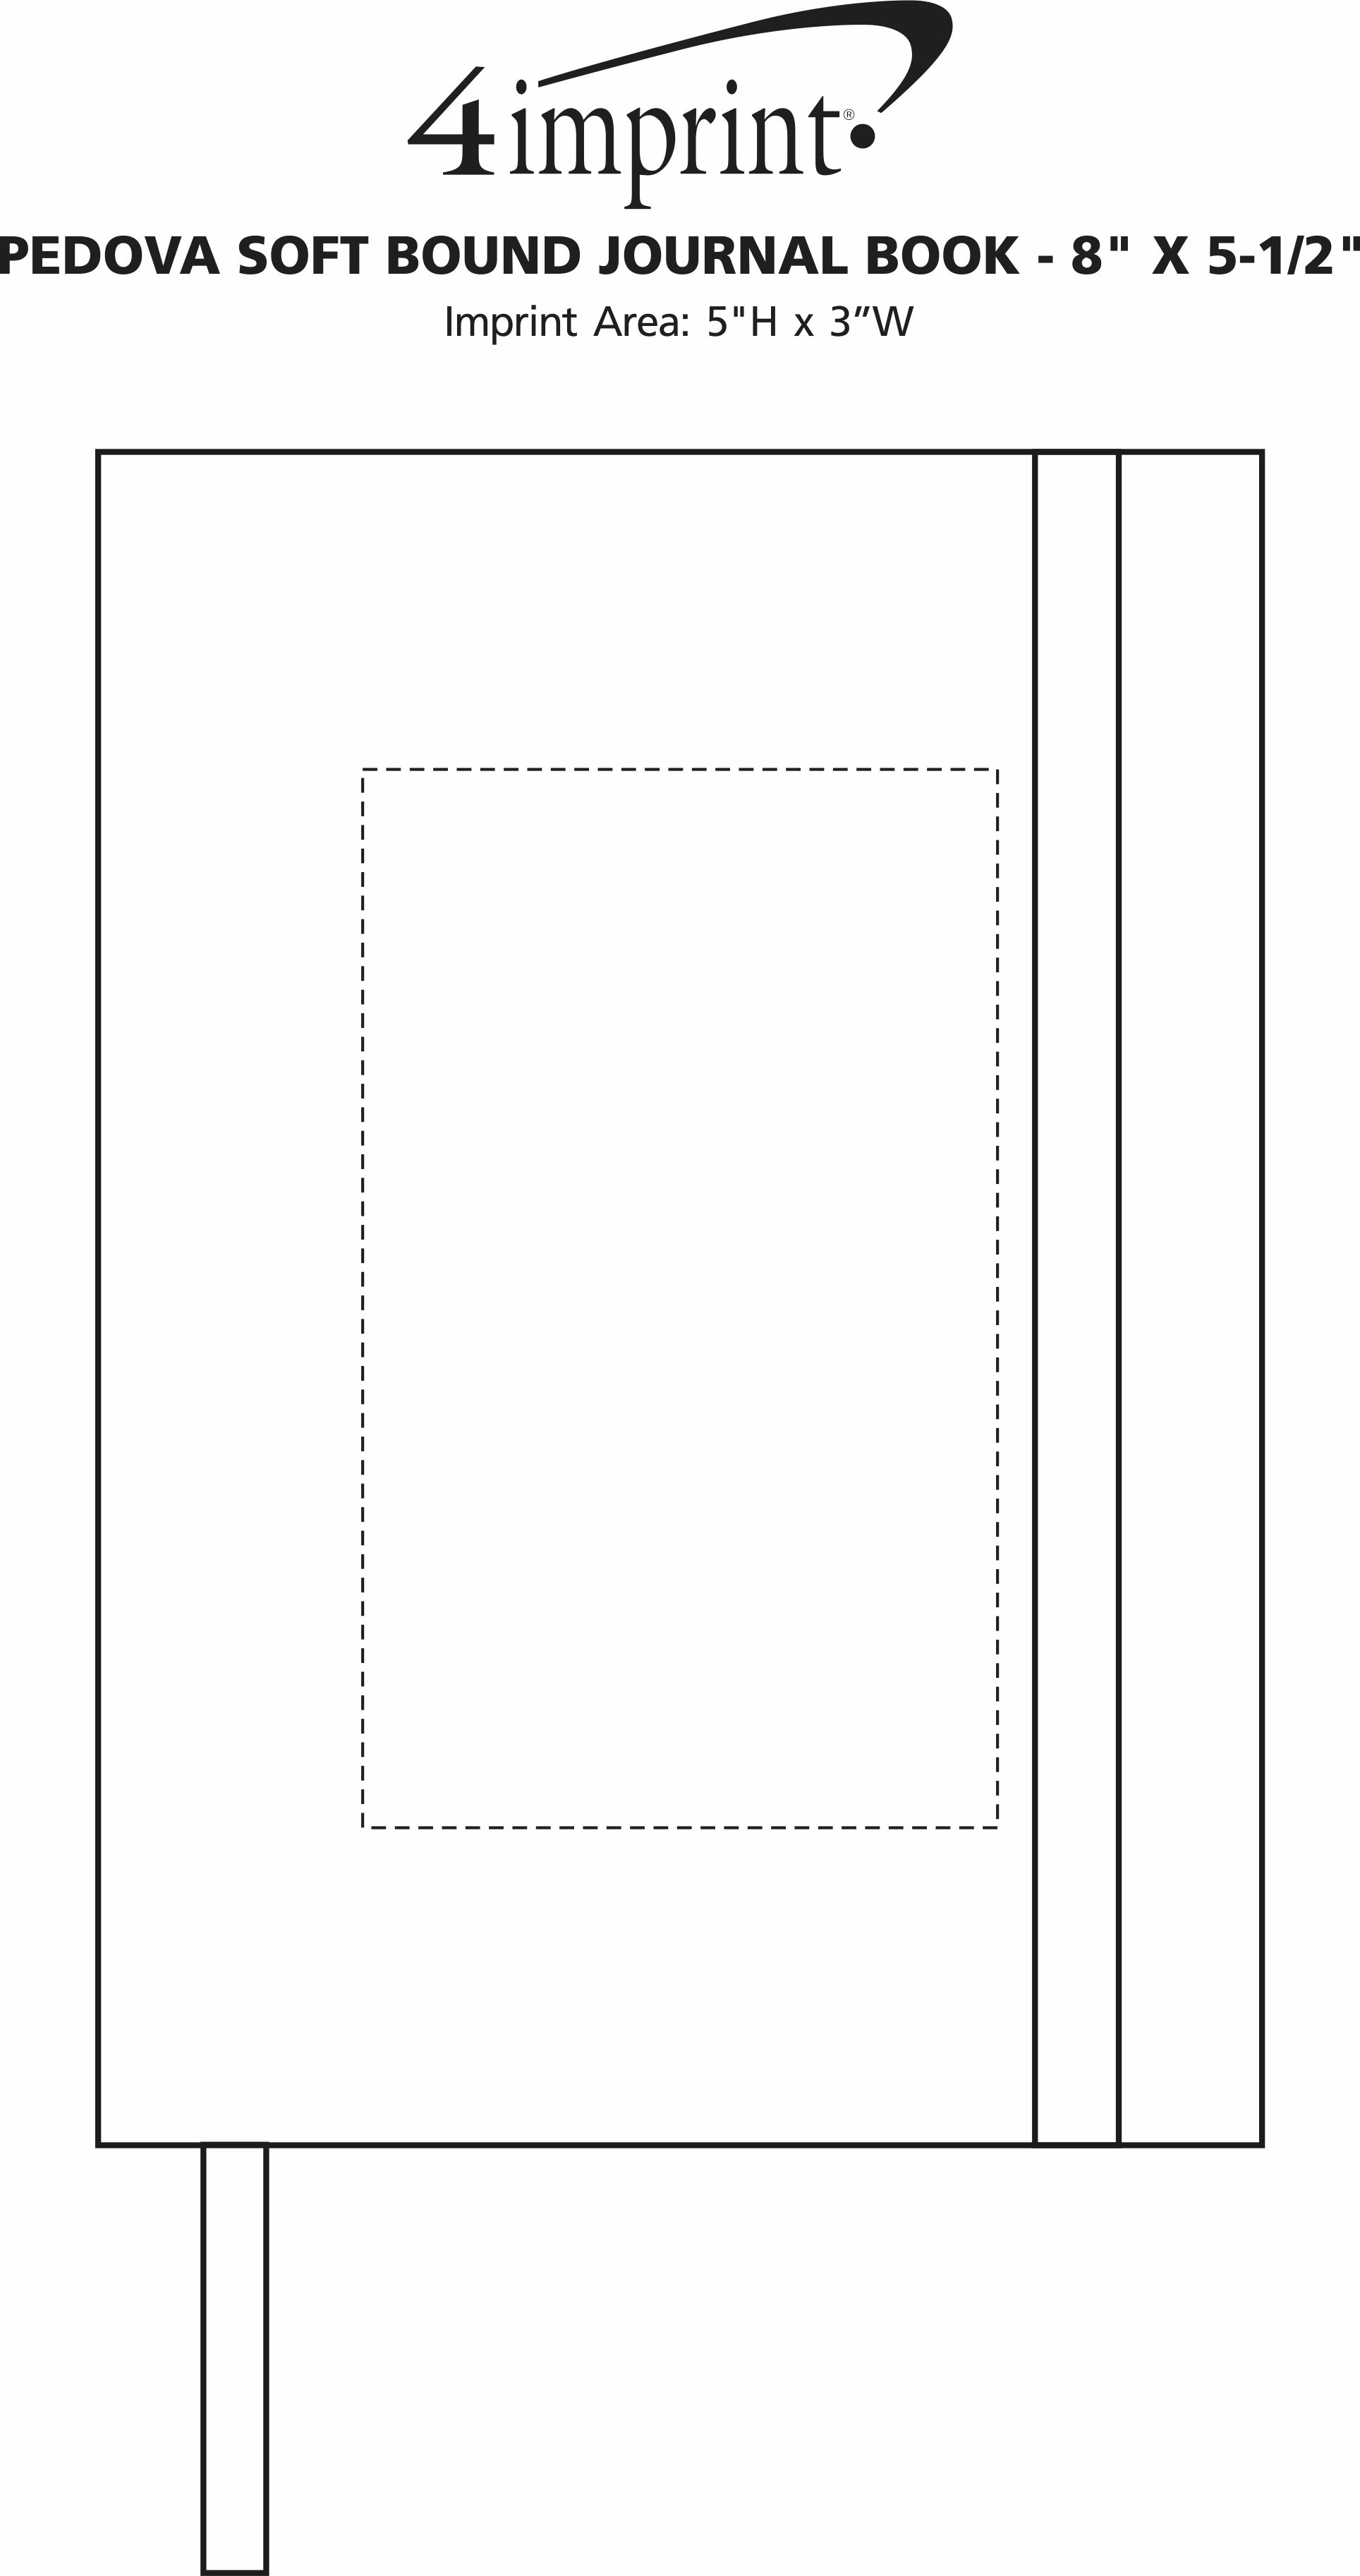 Imprint Area of Pedova Soft Bound Journal Book - 8" x 5-1/2"